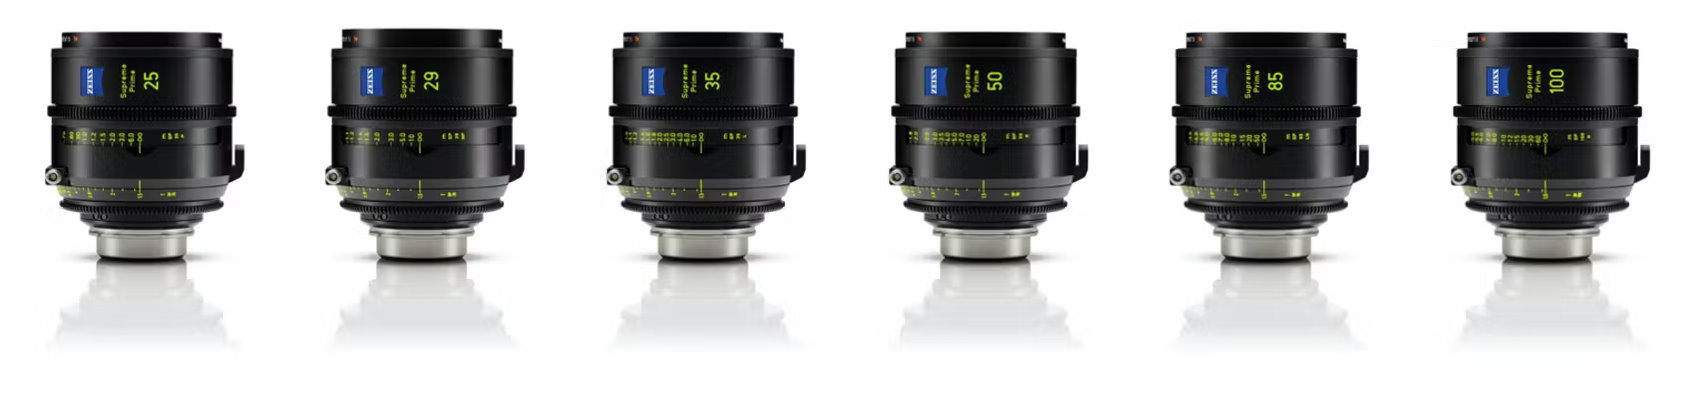 ZEISS Supreme Prime set of 6 lenses